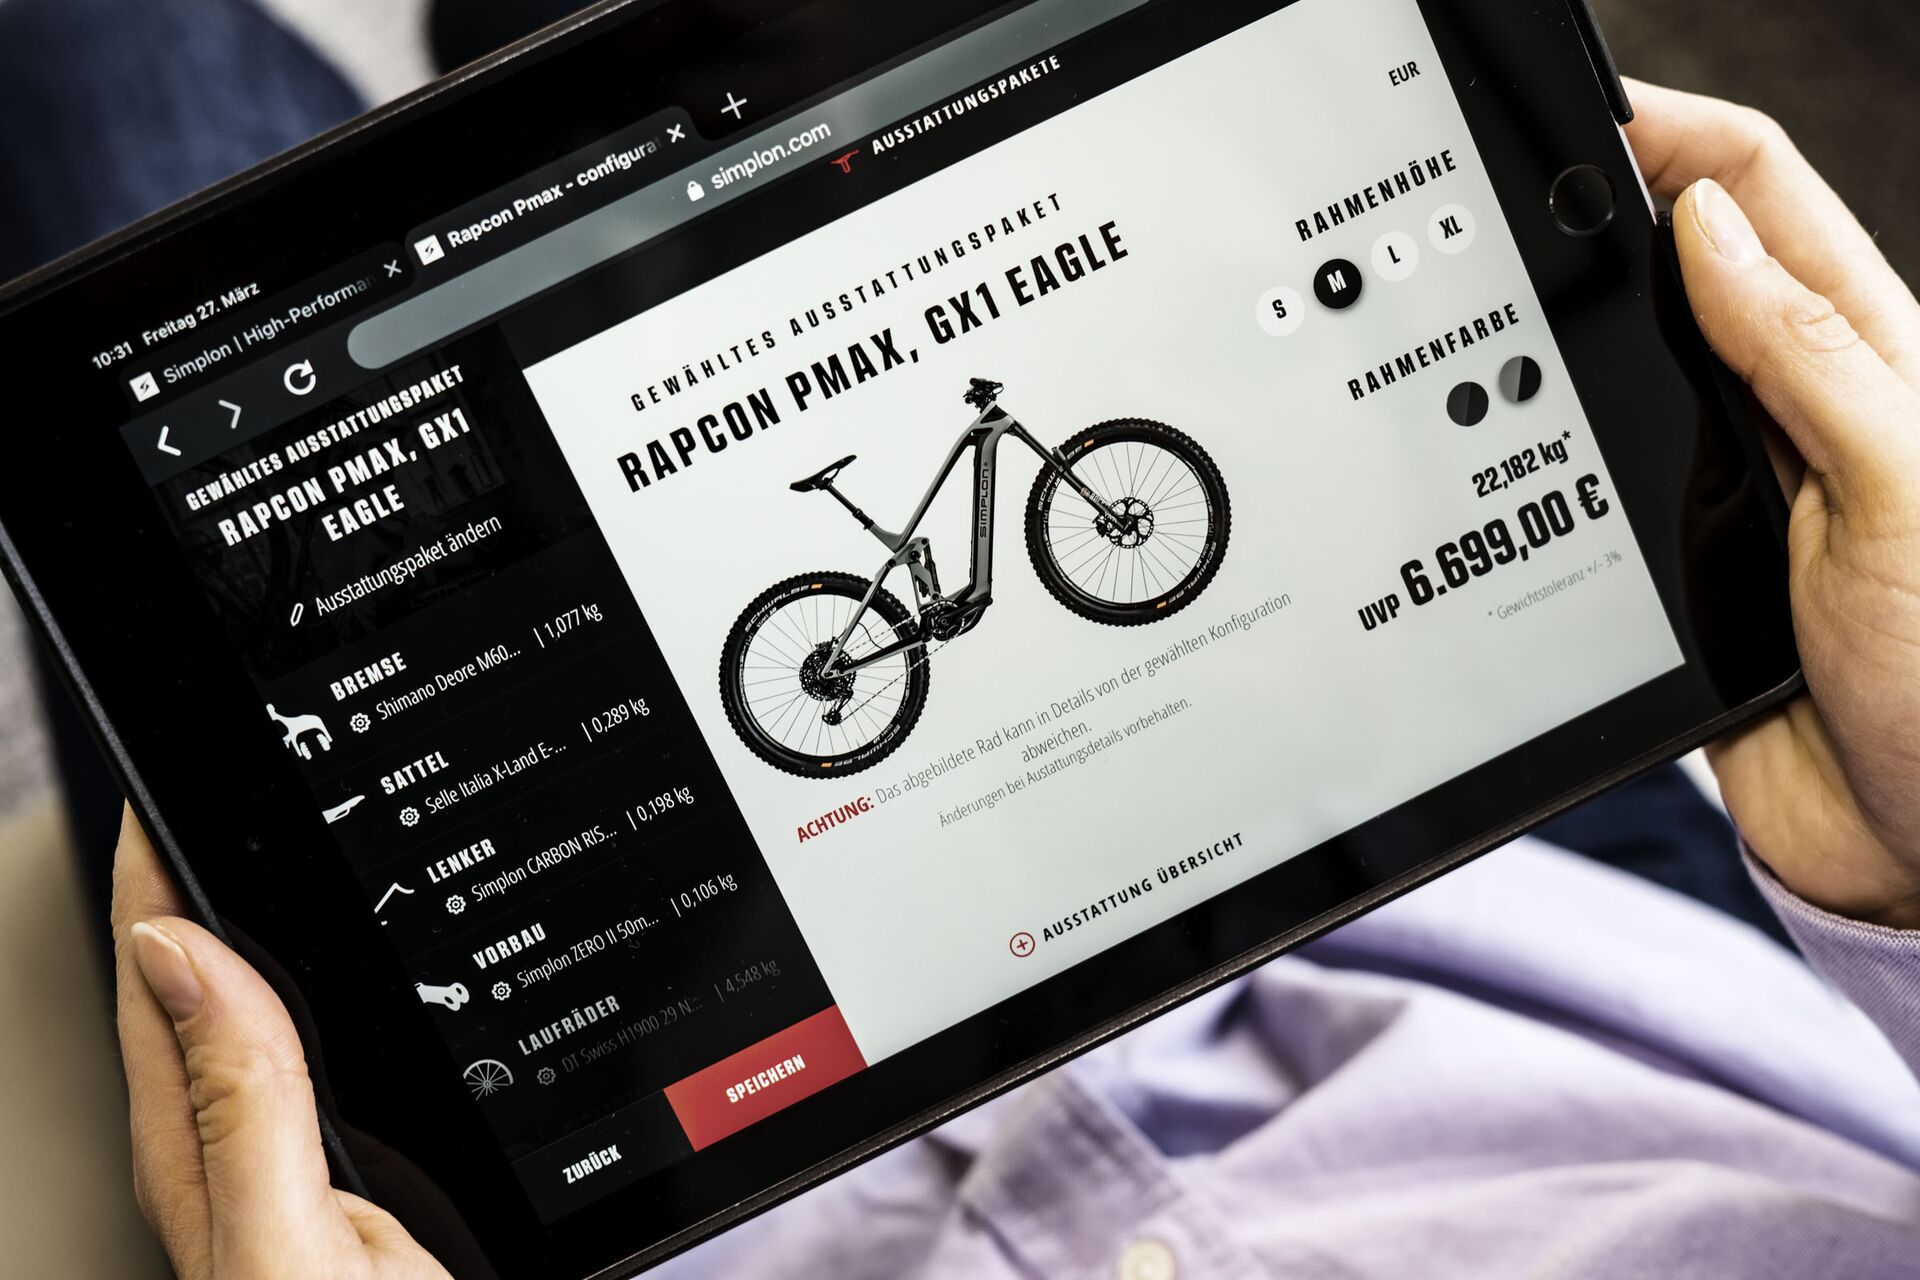 Configure your dream bike